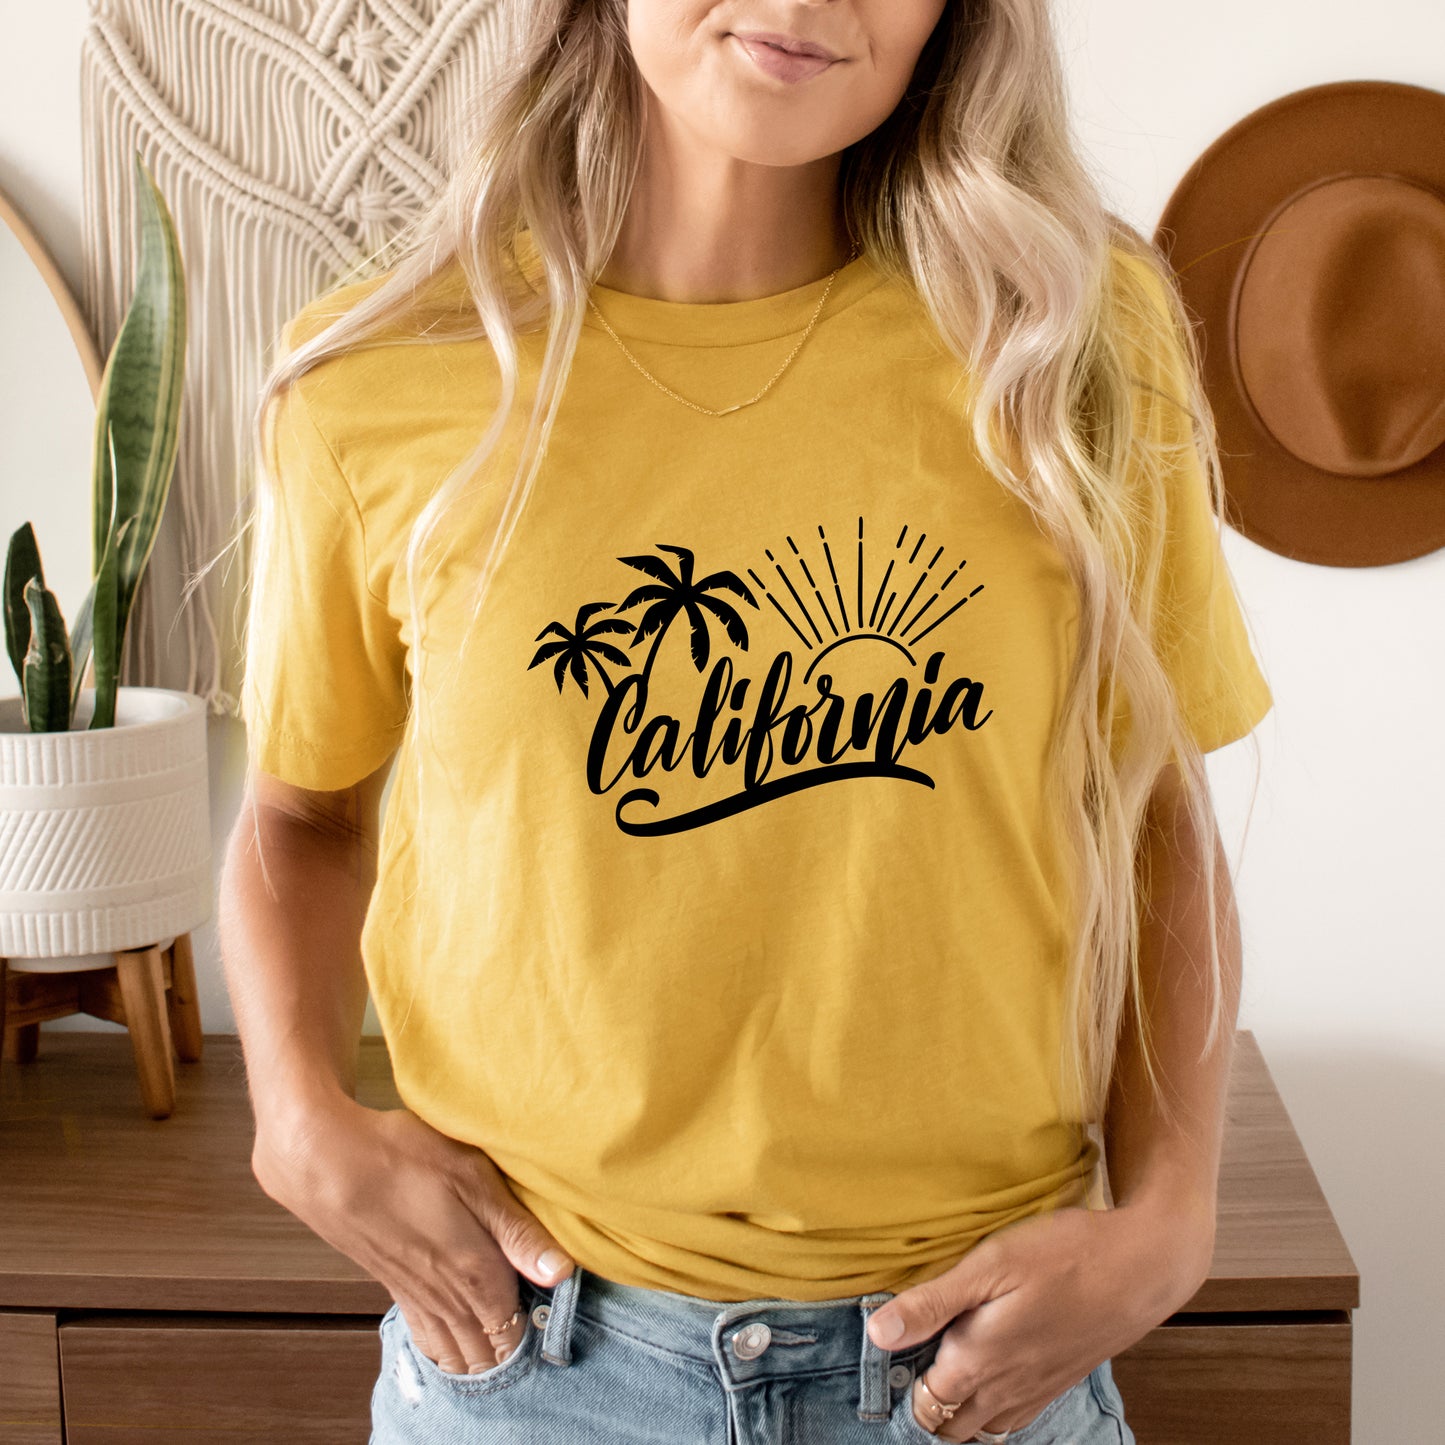 California Rays | Short Sleeve Graphic Tee